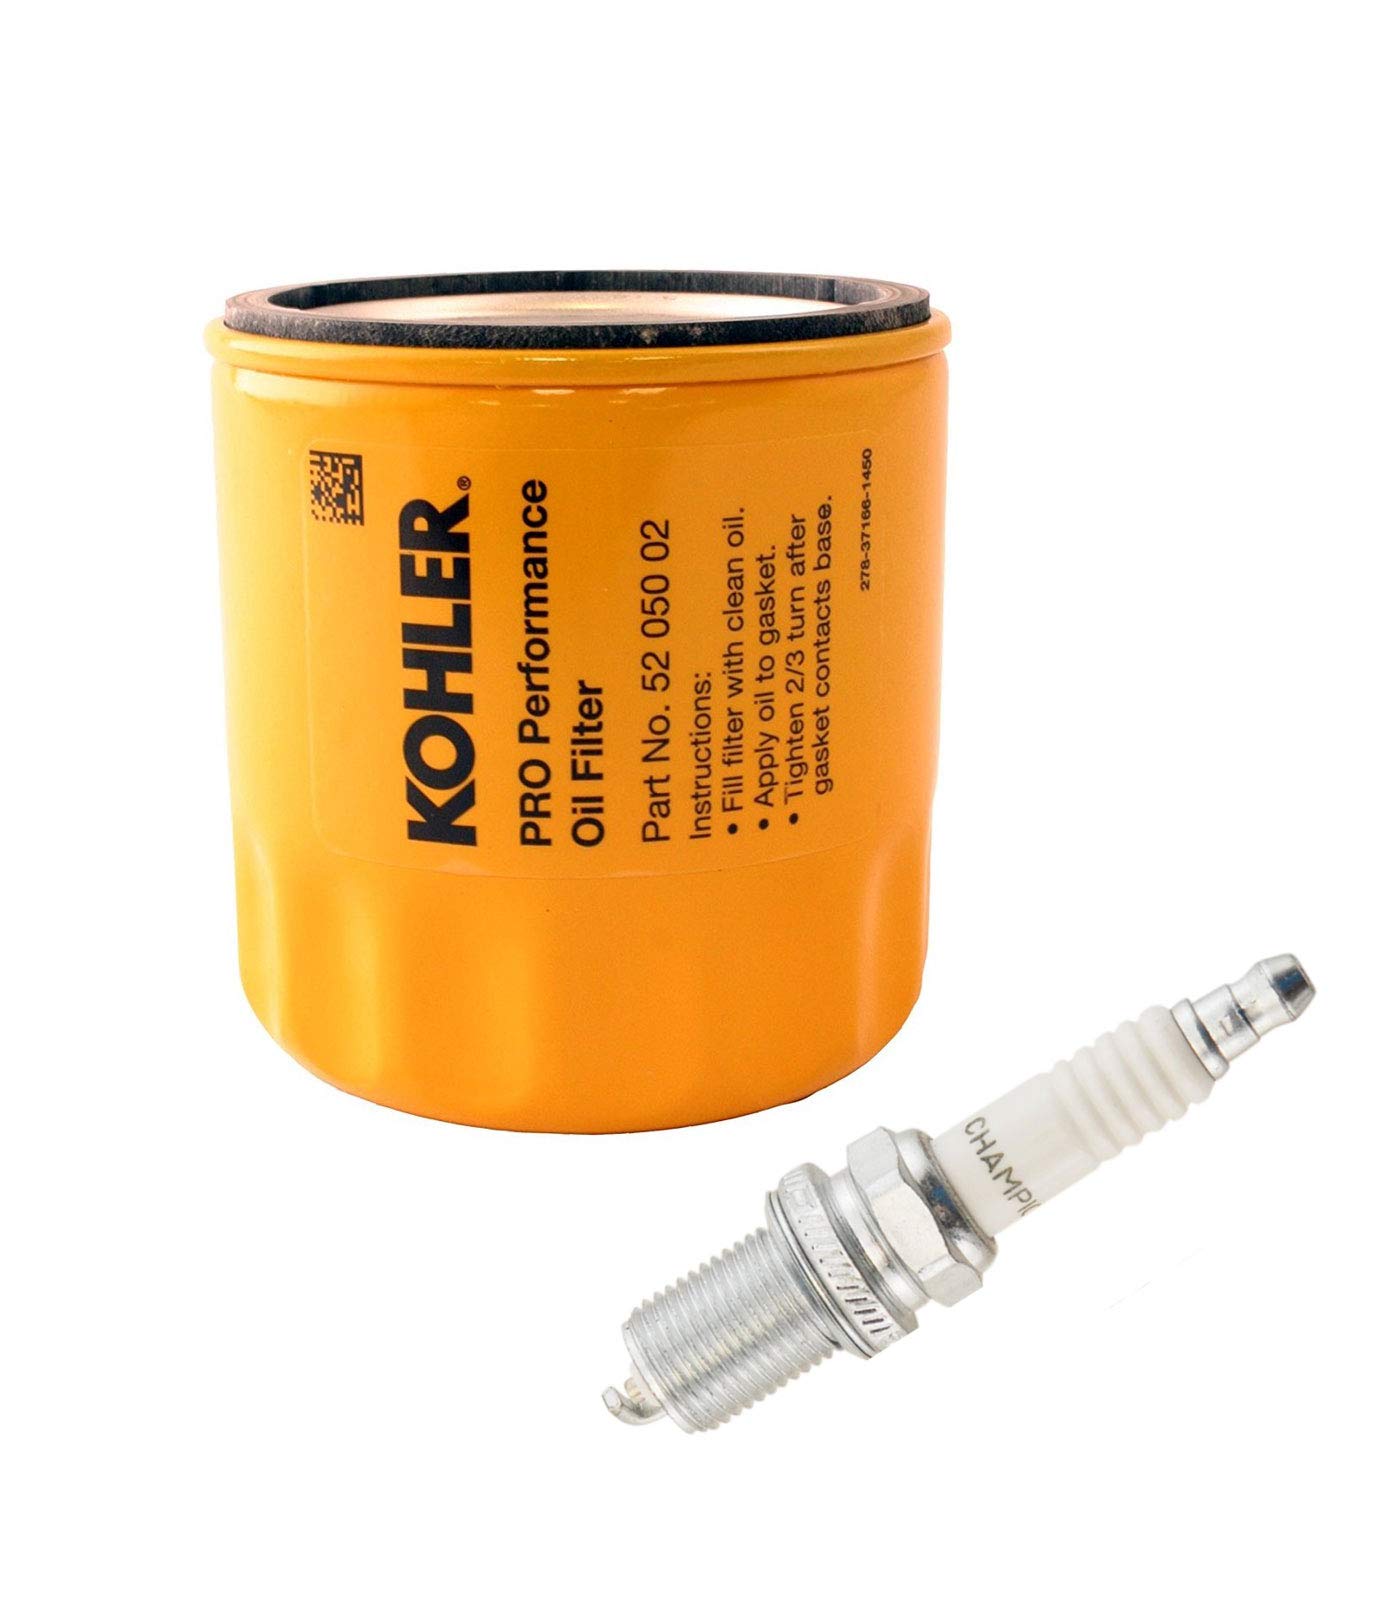 Kohler 52 050 02-S Engine Oil Filter Extra Capacity and Champion RC12YC Spark Plug For CH11 - CH15, CV11 - CV22, M18 - M20, MV16 - MV20 And K582 von Kohler